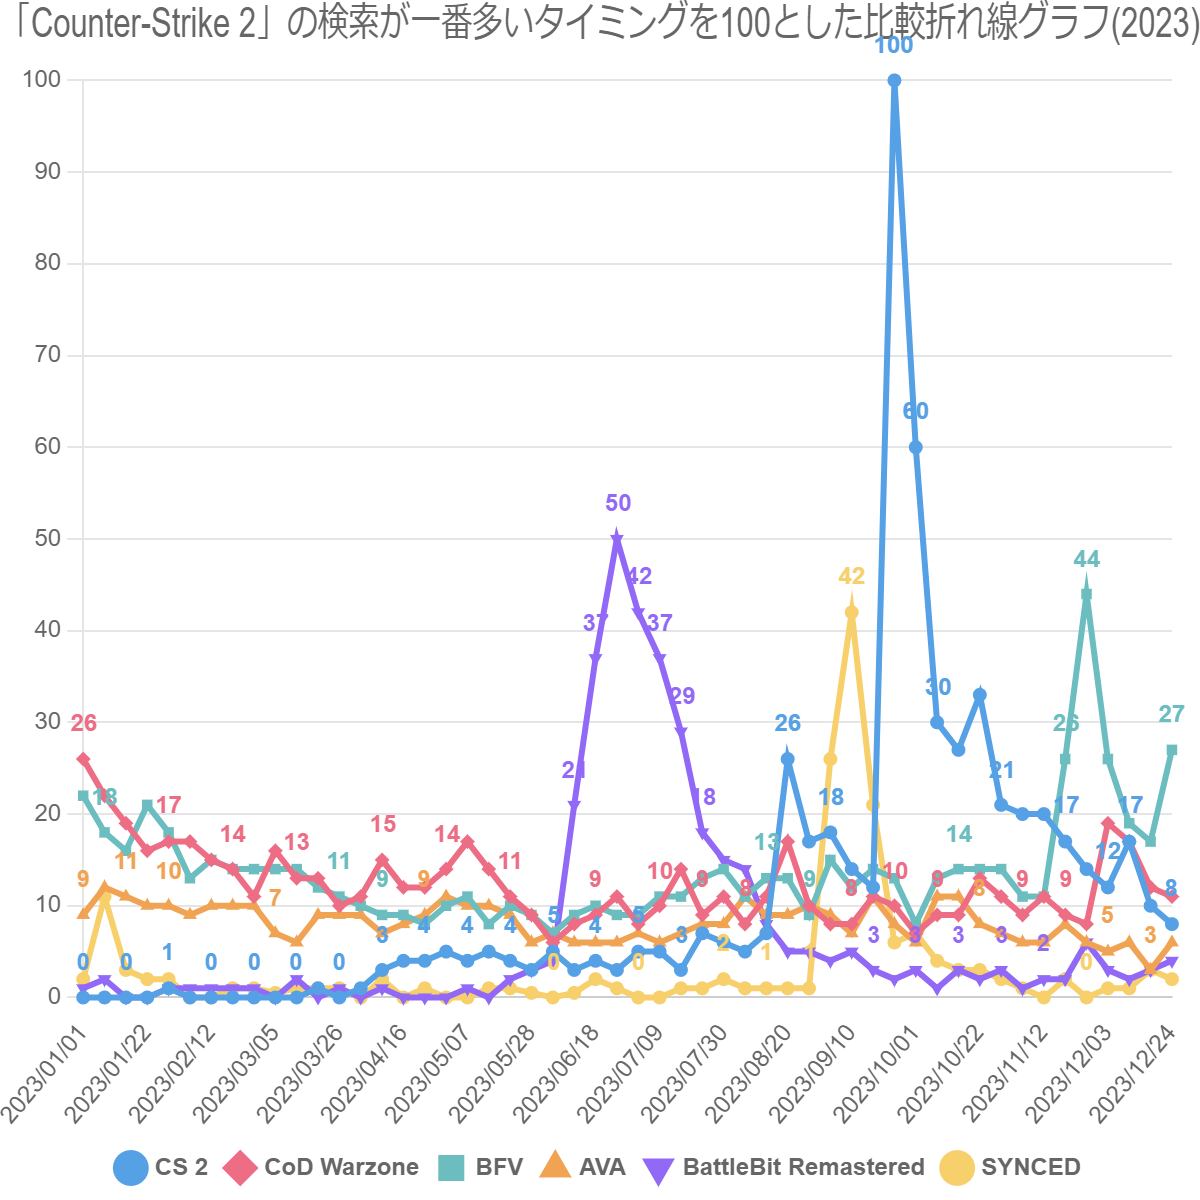 「Counter-Strike 2」の検索が一番多いタイミングを100とした比較折れ線グラフ(2023)